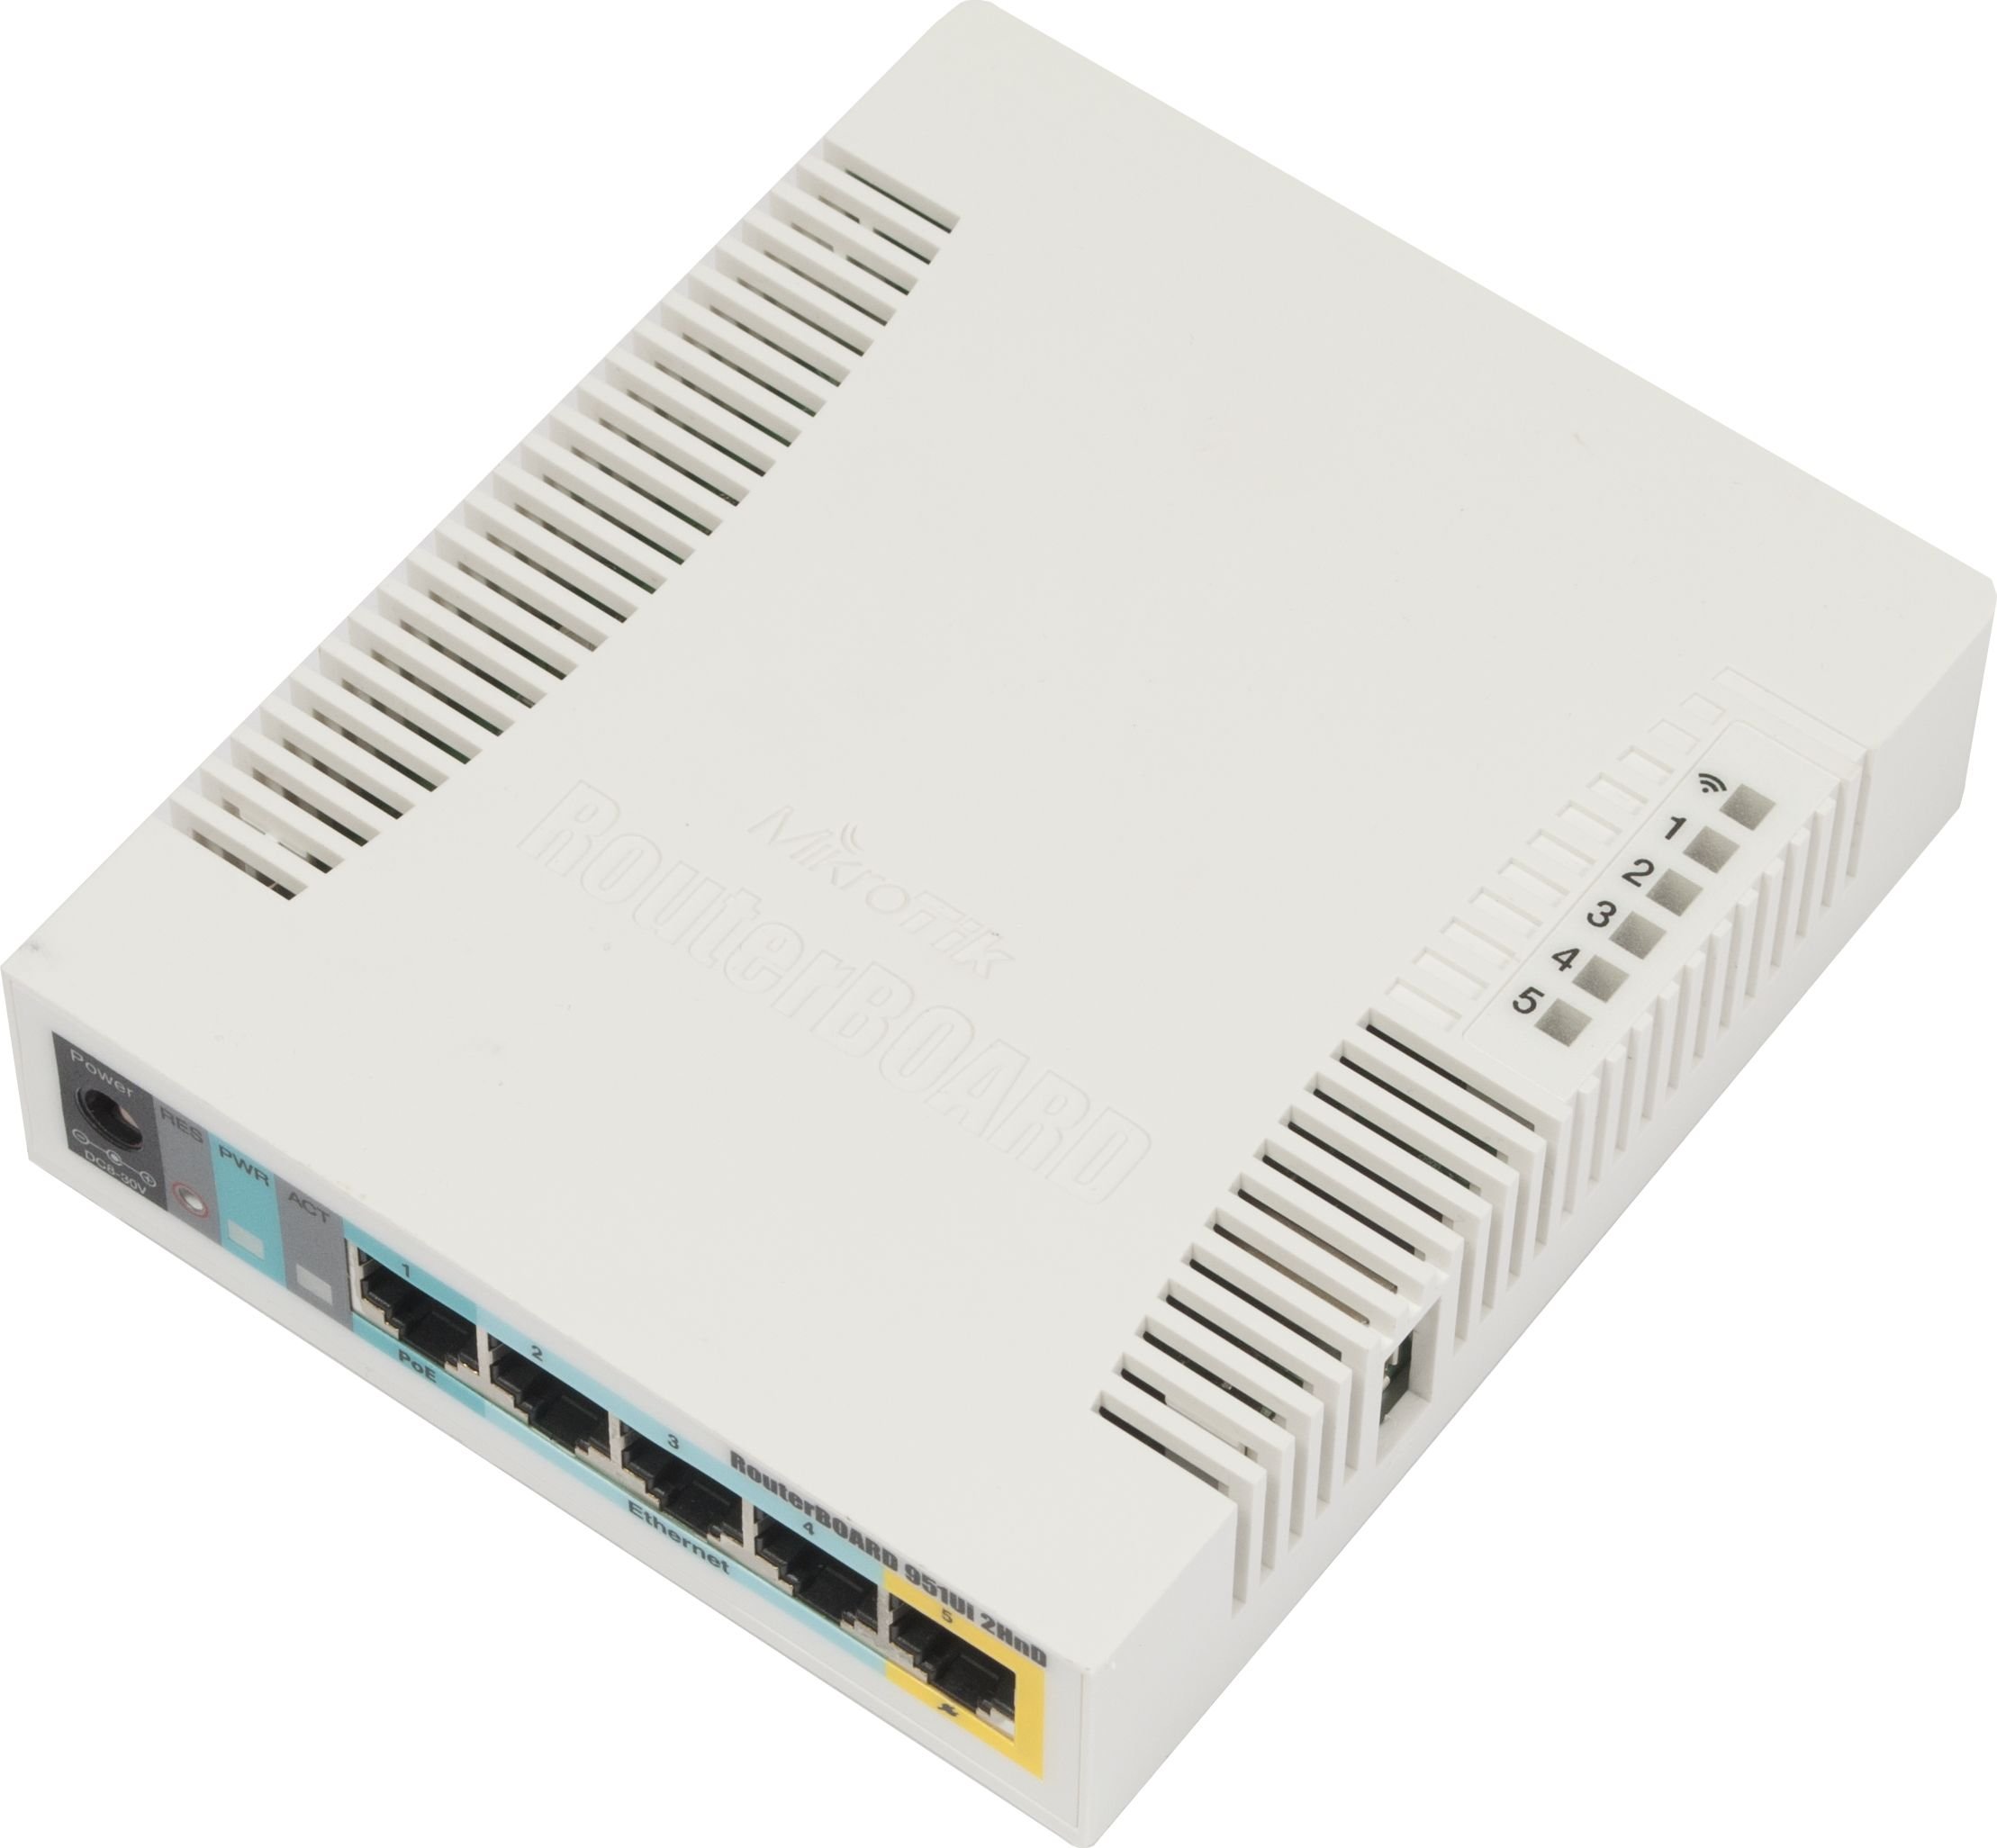 Router - MikroTik RB951Ui-2HnD RouterOS L4 128MB RAM, 5xLAN, 1xUSB, 2.4GHz 802.11b/g/n